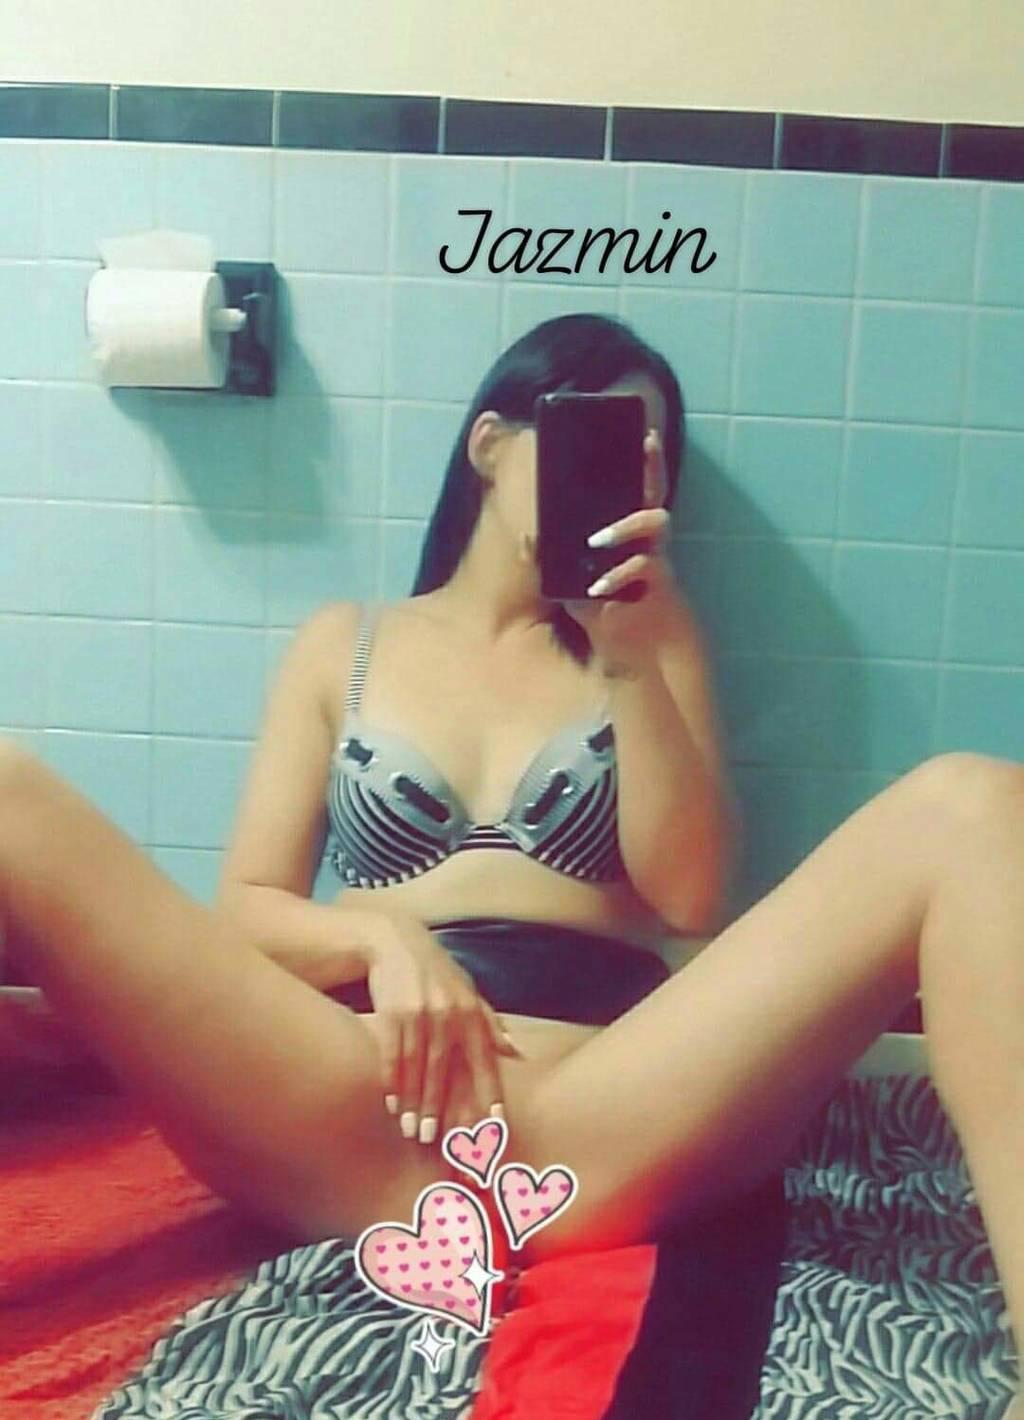 Jazmin ~ Ask about my pics/vids 226~964~2979